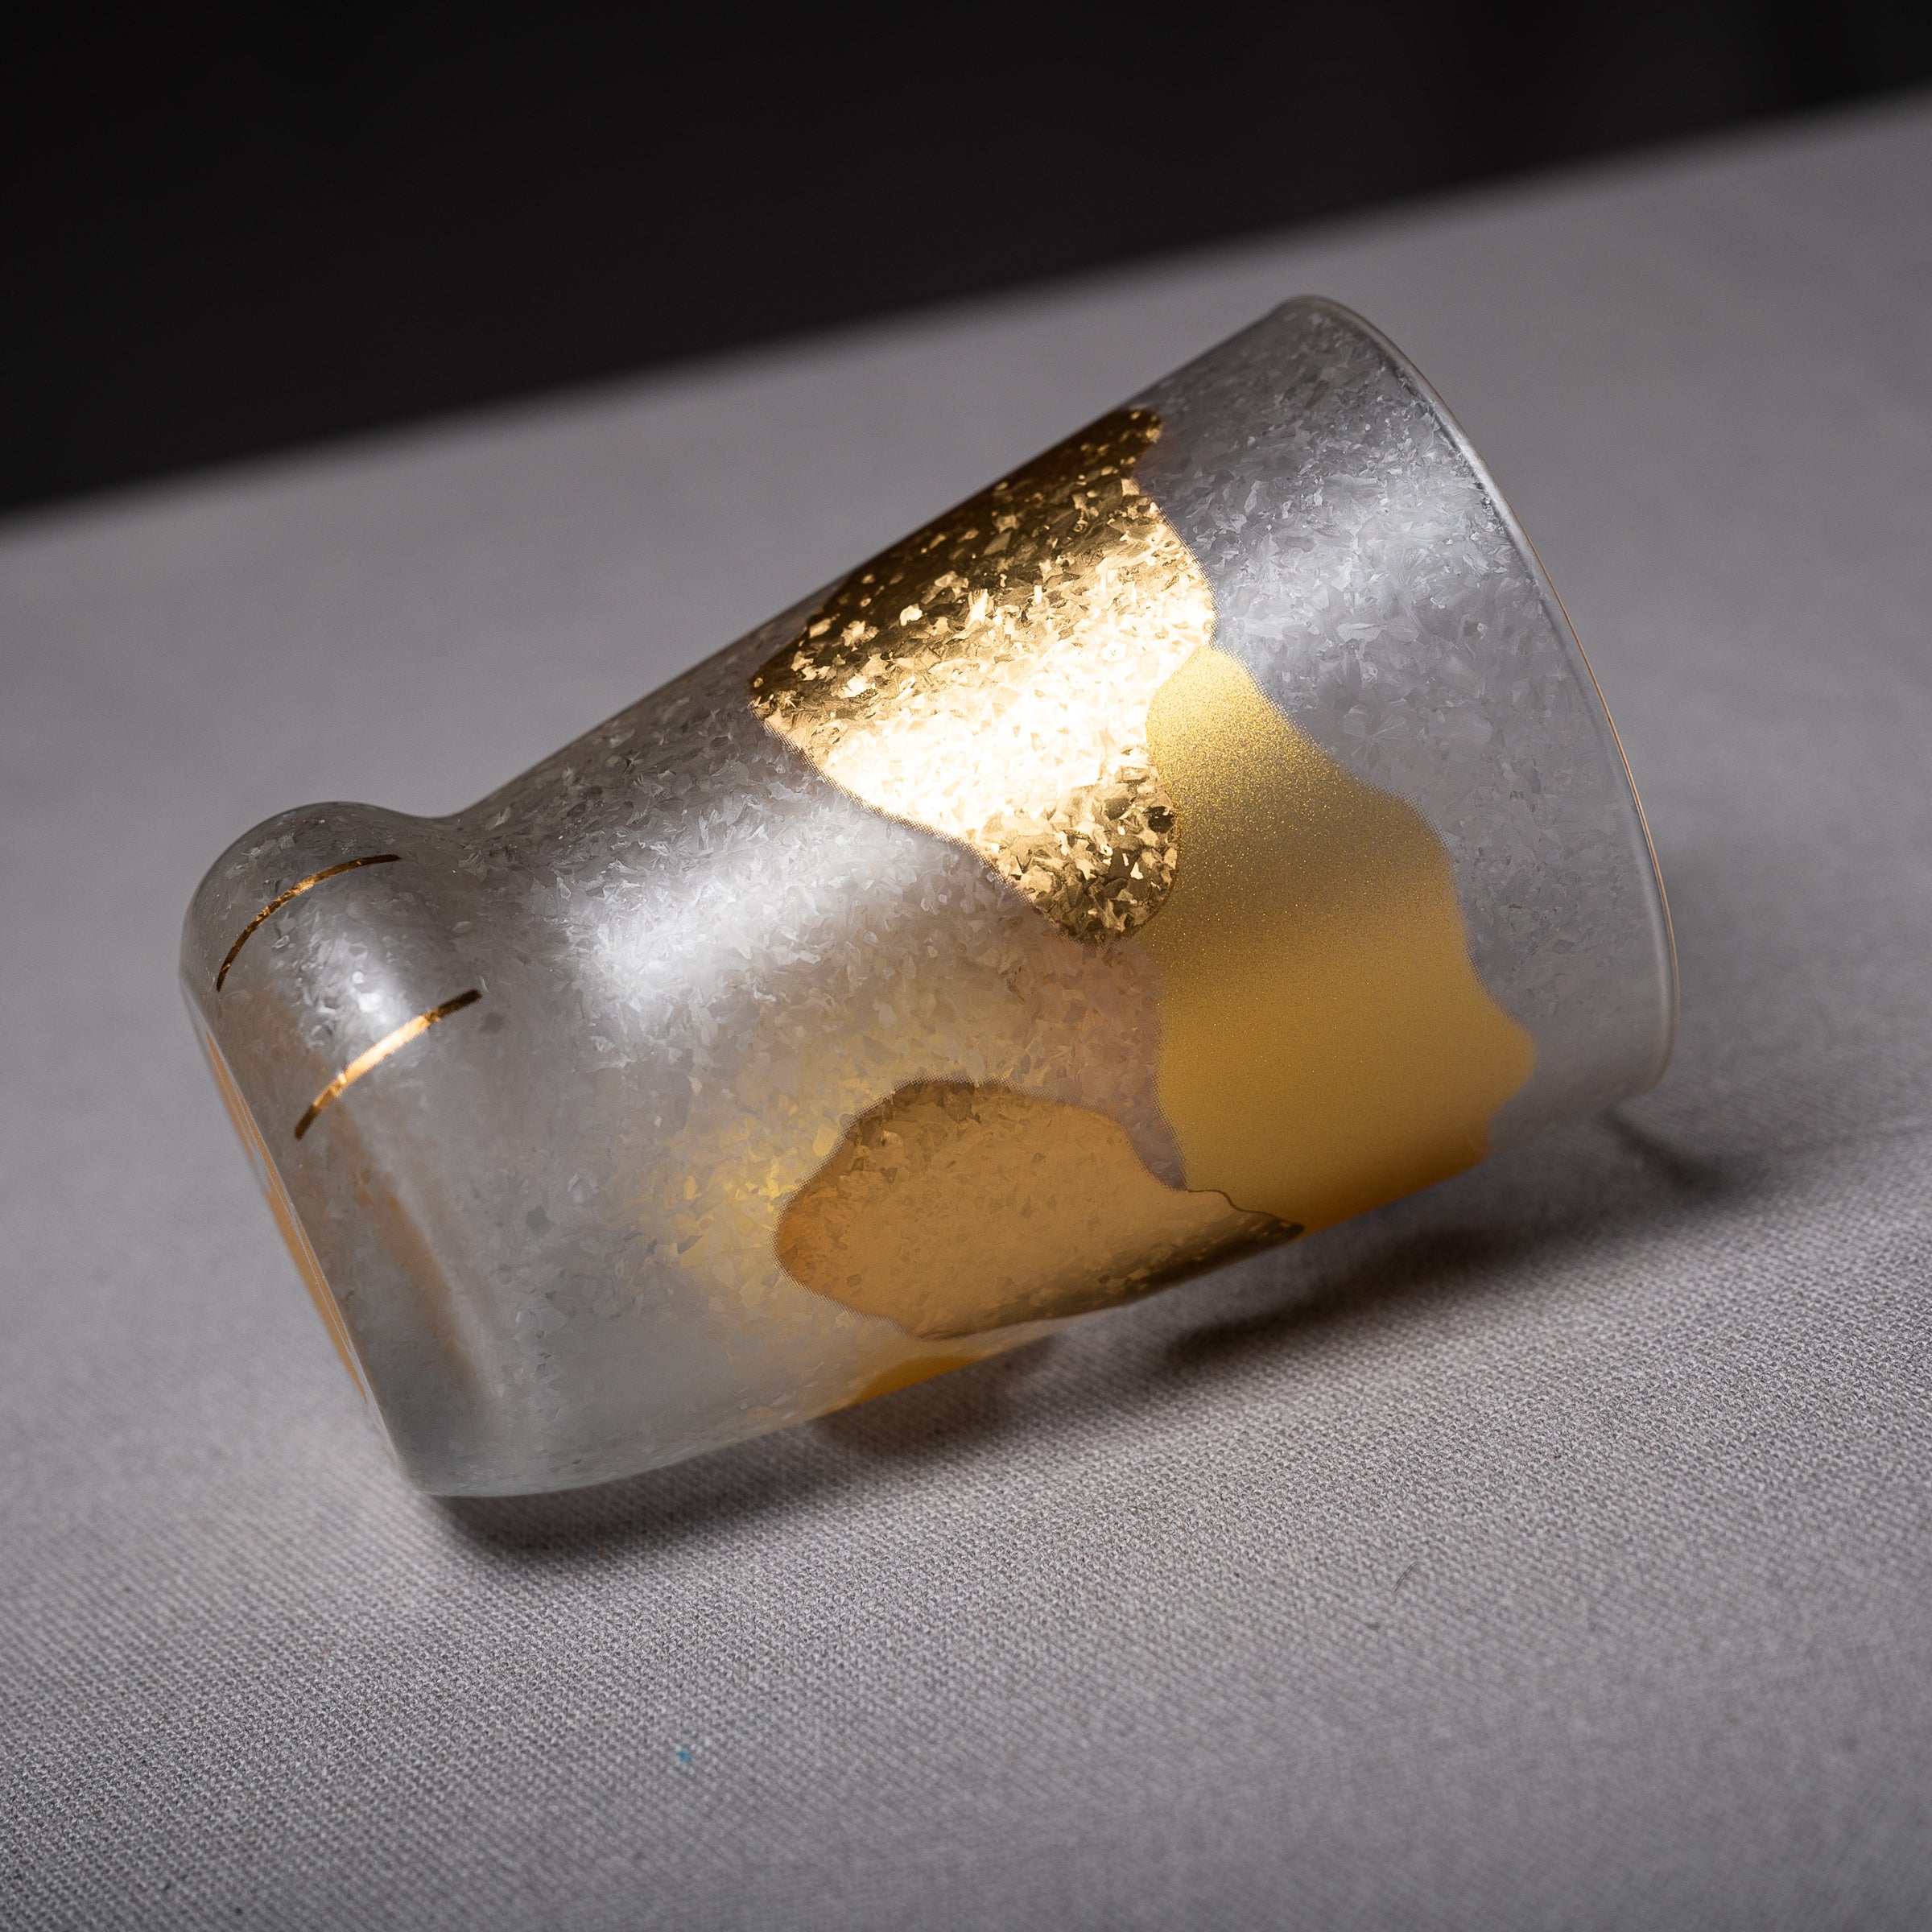 Coconeco Golden Colour Glass - 300 ml - Premium Gift Box / ココネコ プレミアムグラス